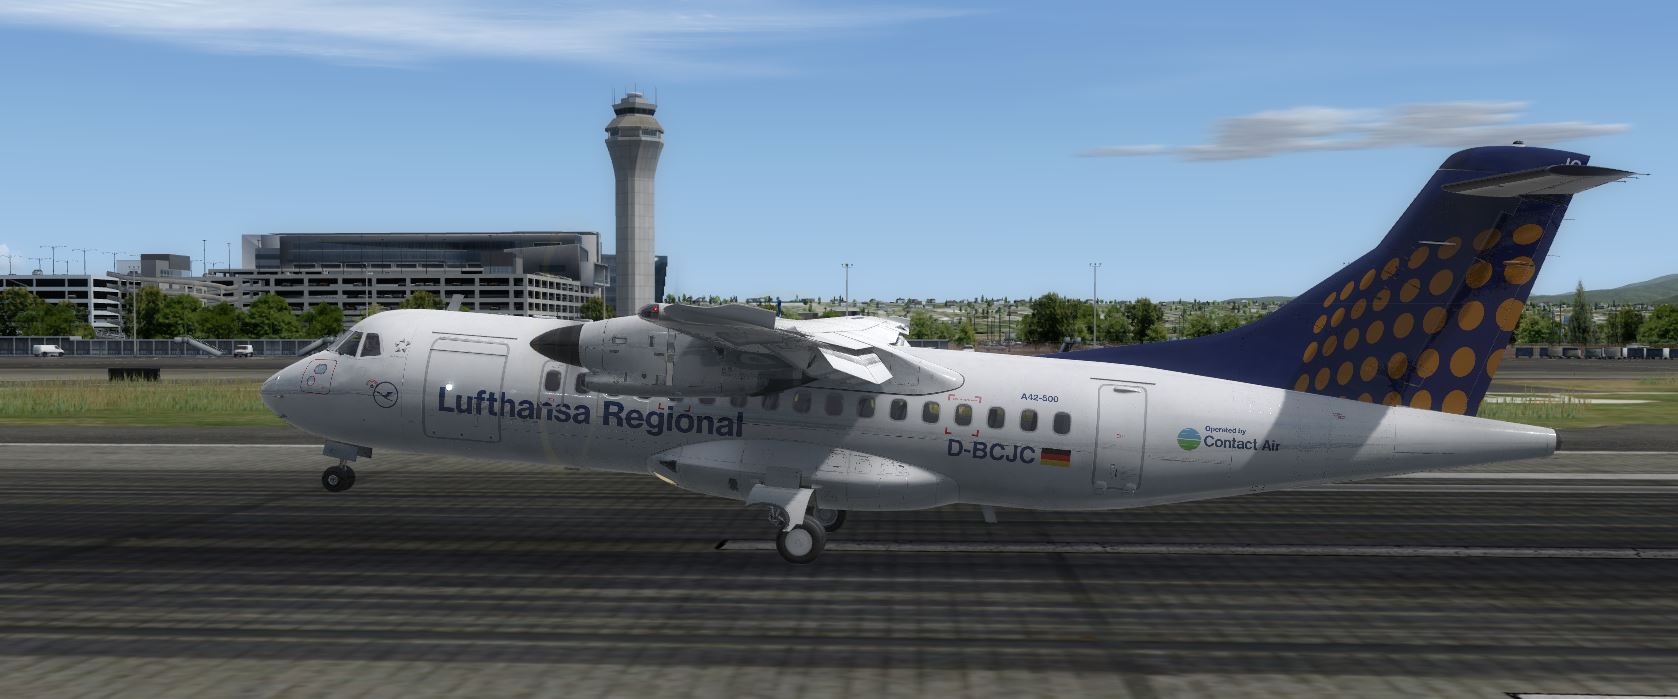 ATR42-500 Lufthansa-3473 